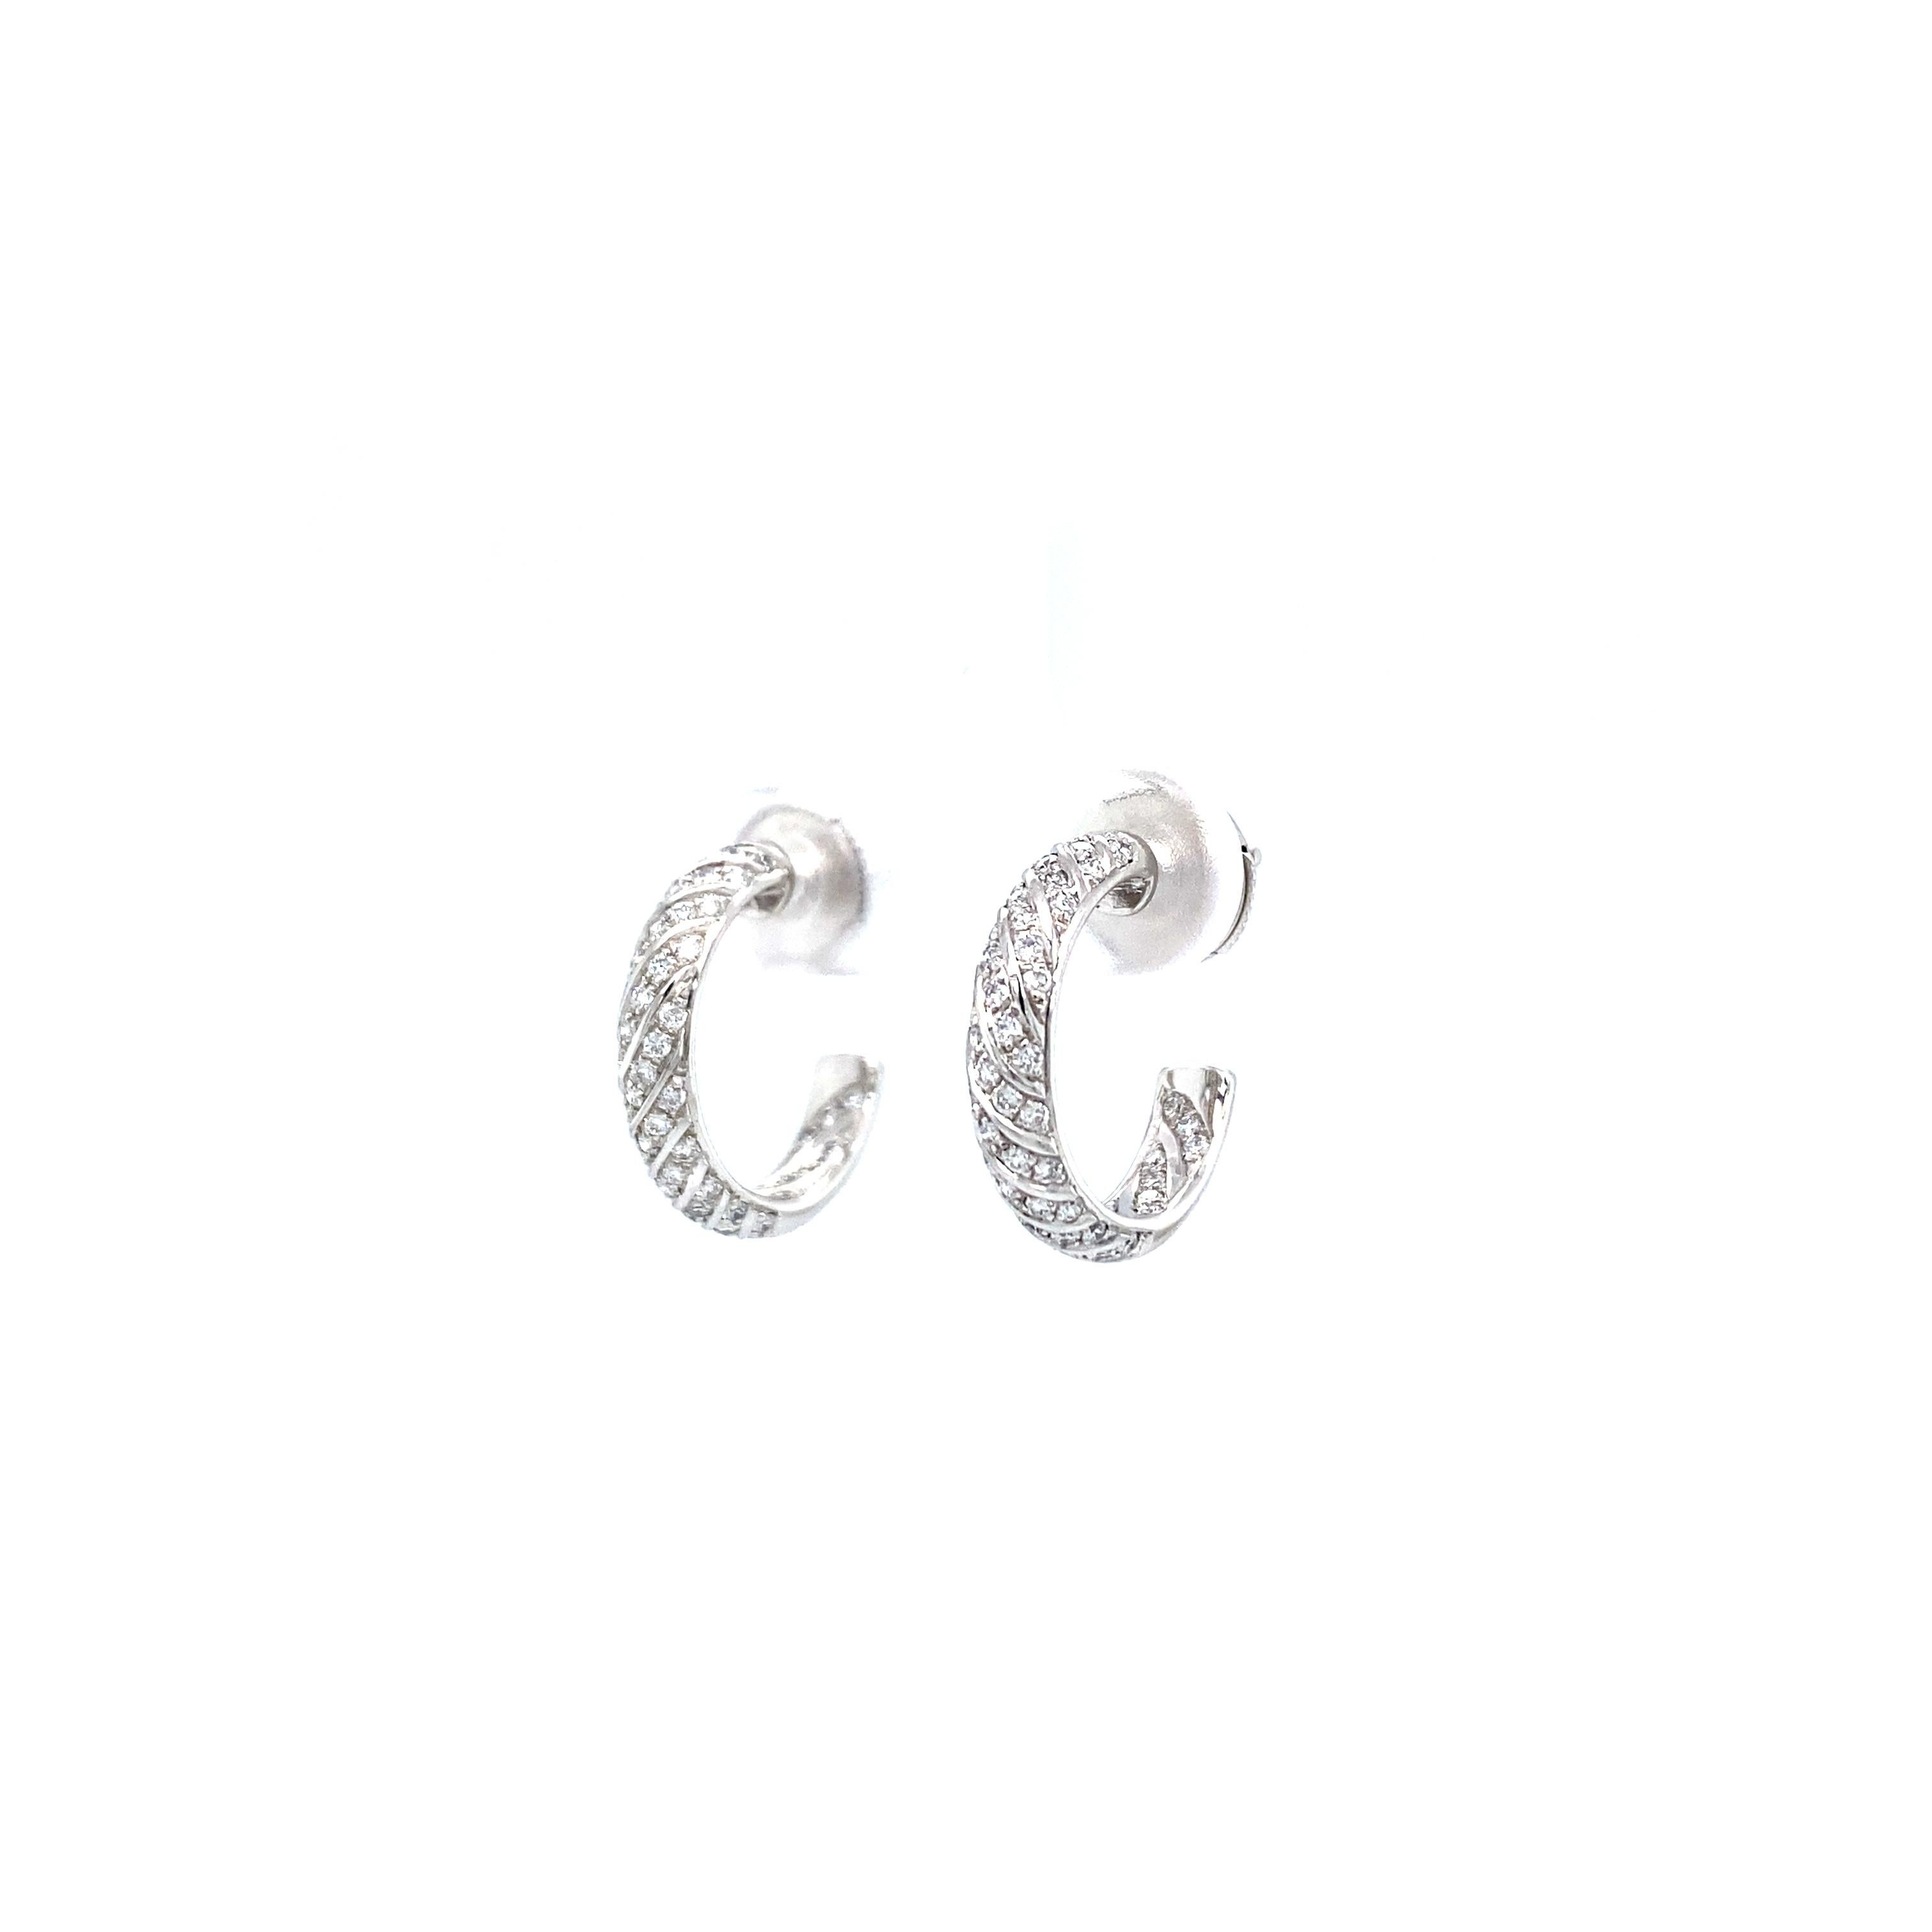 Round Hoop Stud Earrings 18k White Gold 104 Diamonds 0.52 ct G VS Width 3.4 mm For Sale 3